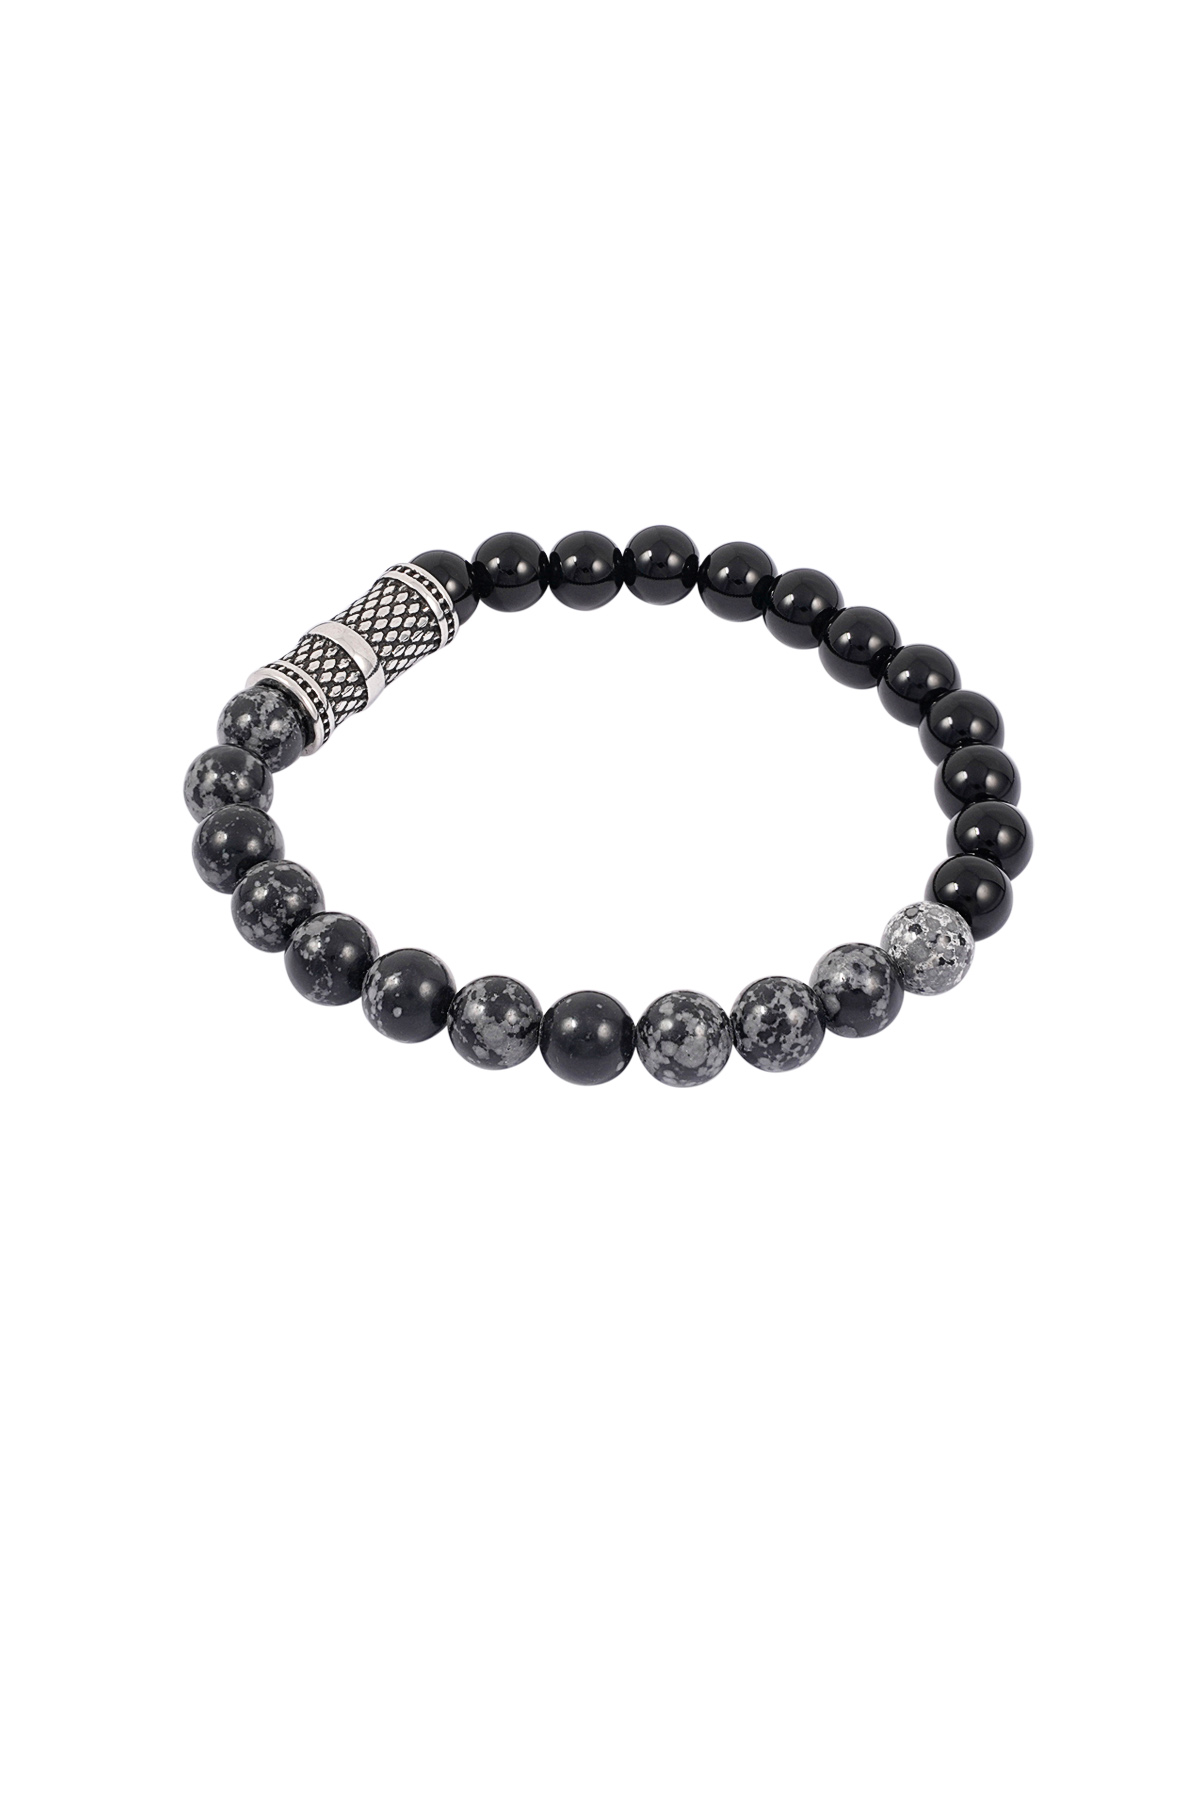 Cooles Herrenarmband mit Perlen - schwarz/silber  Bild4